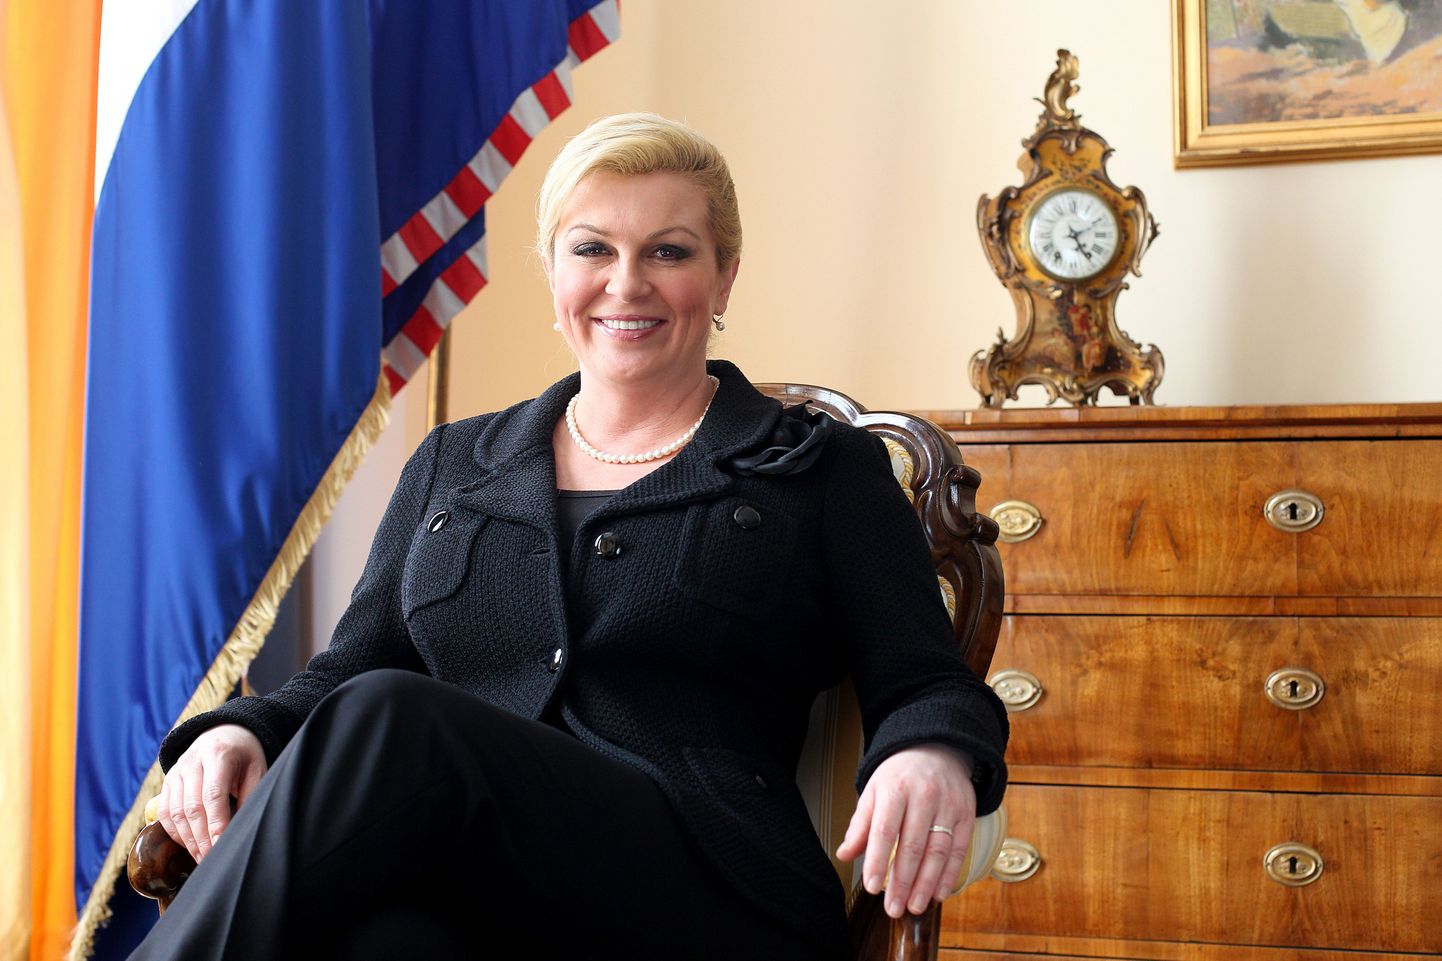 Horvaatia president Kolinda Grabar-Kitarović.